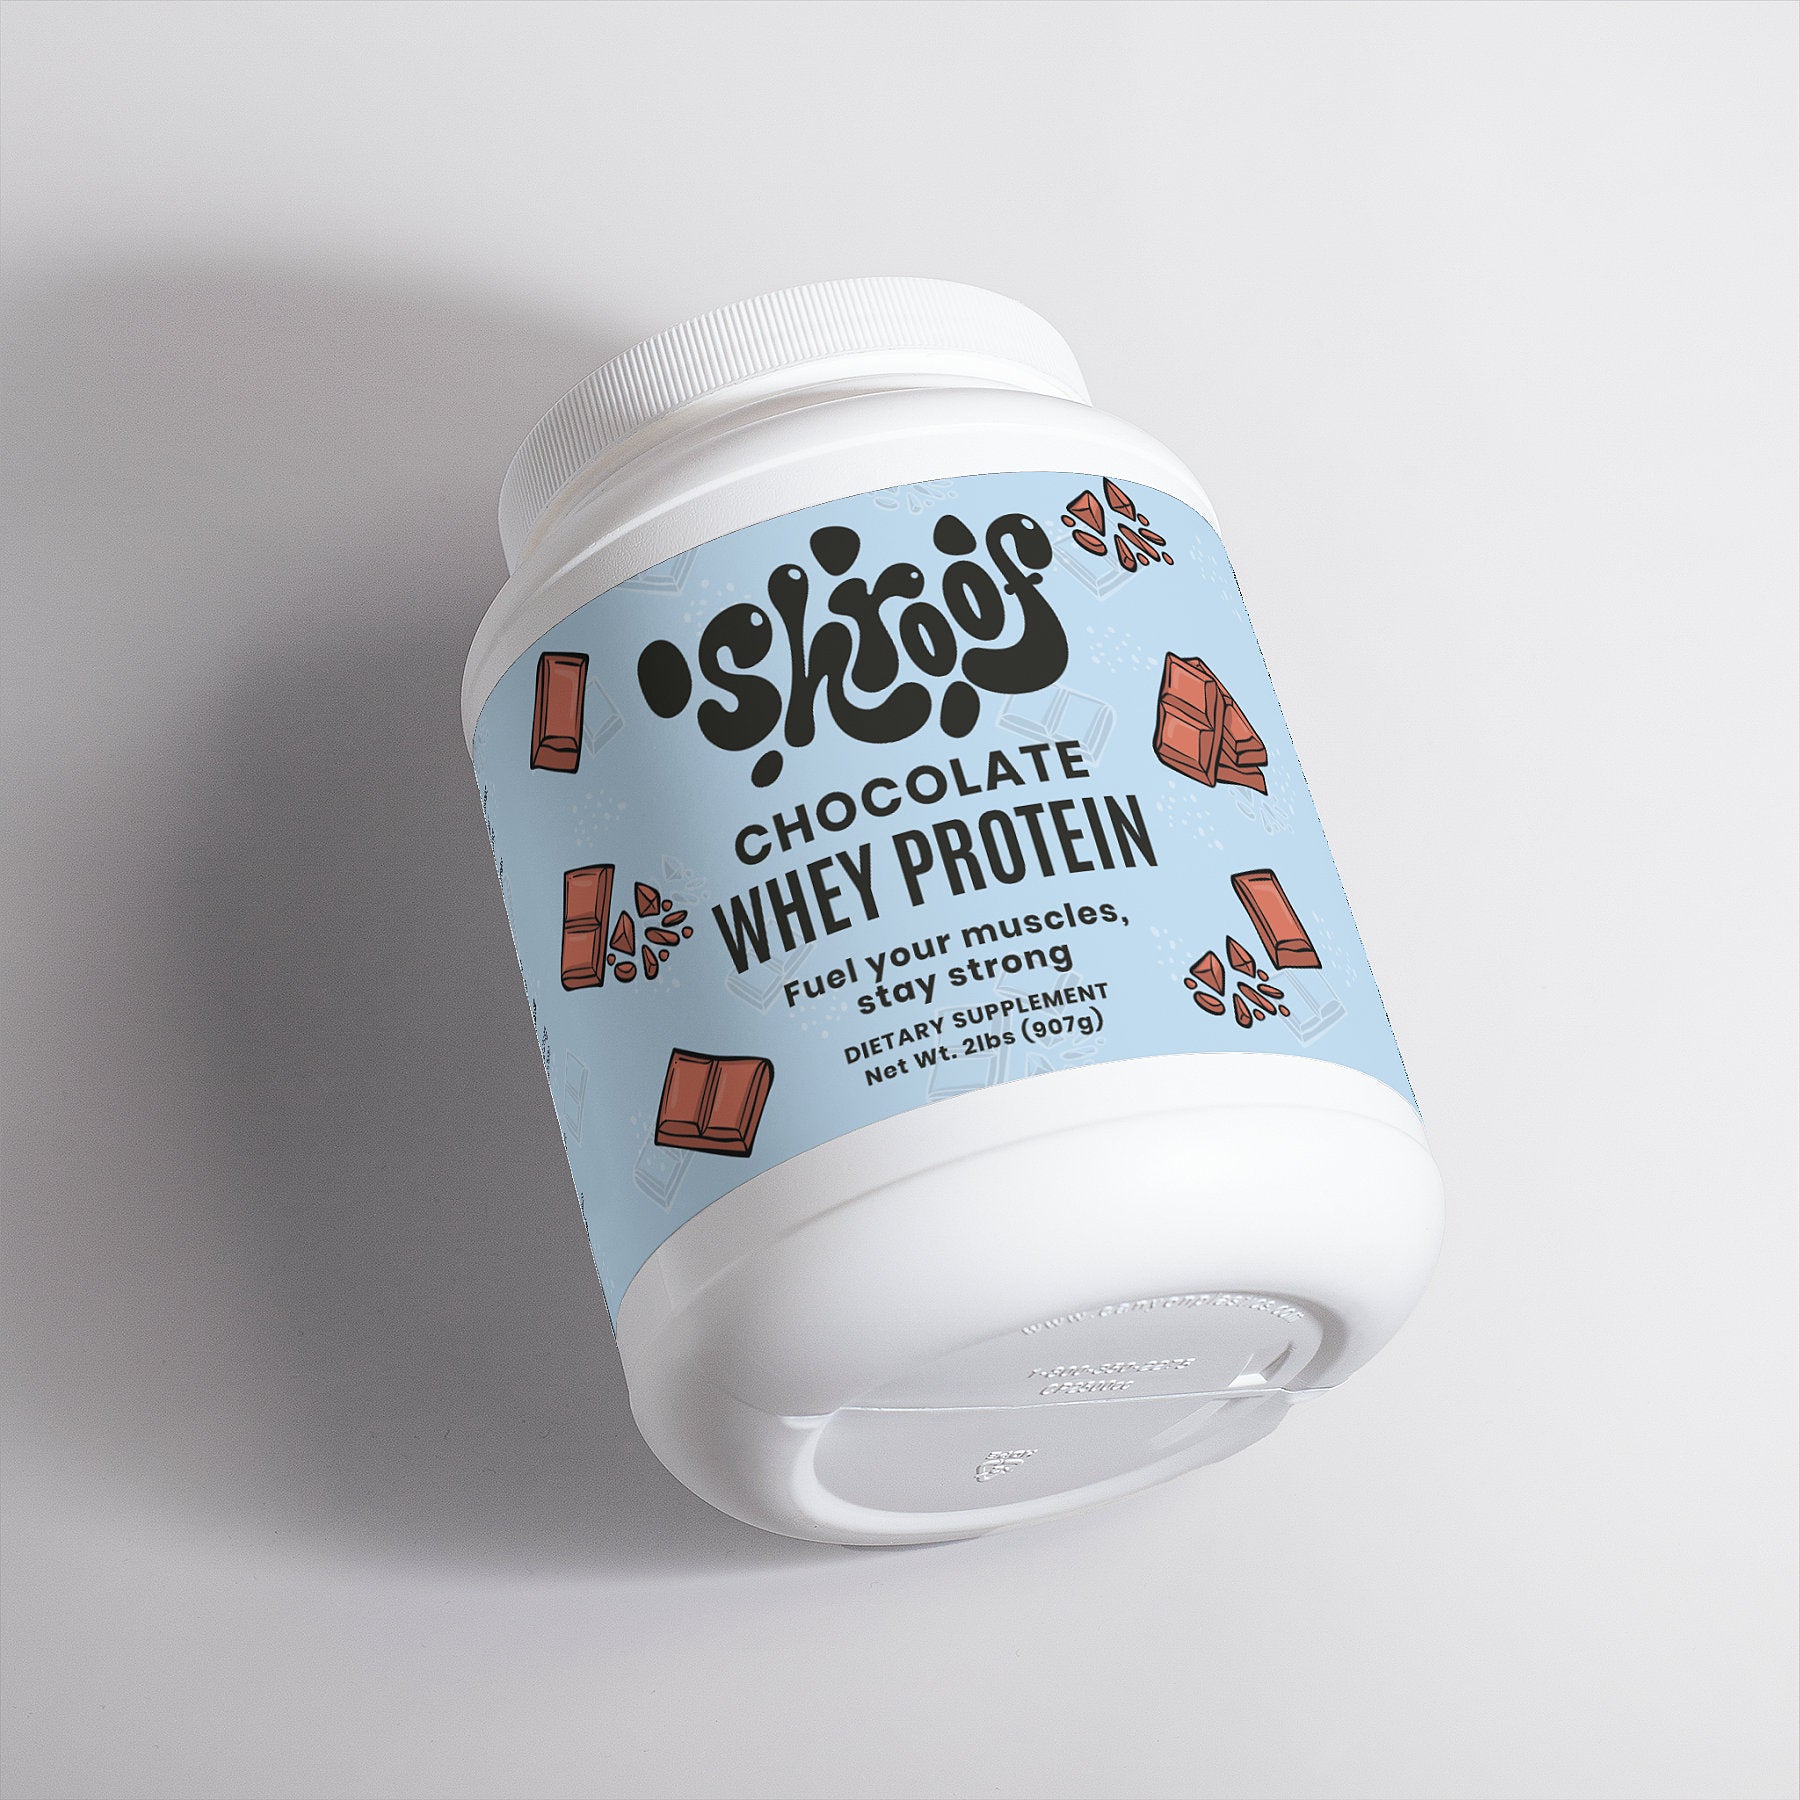 Whey Protein (Chocolate) - Shroof